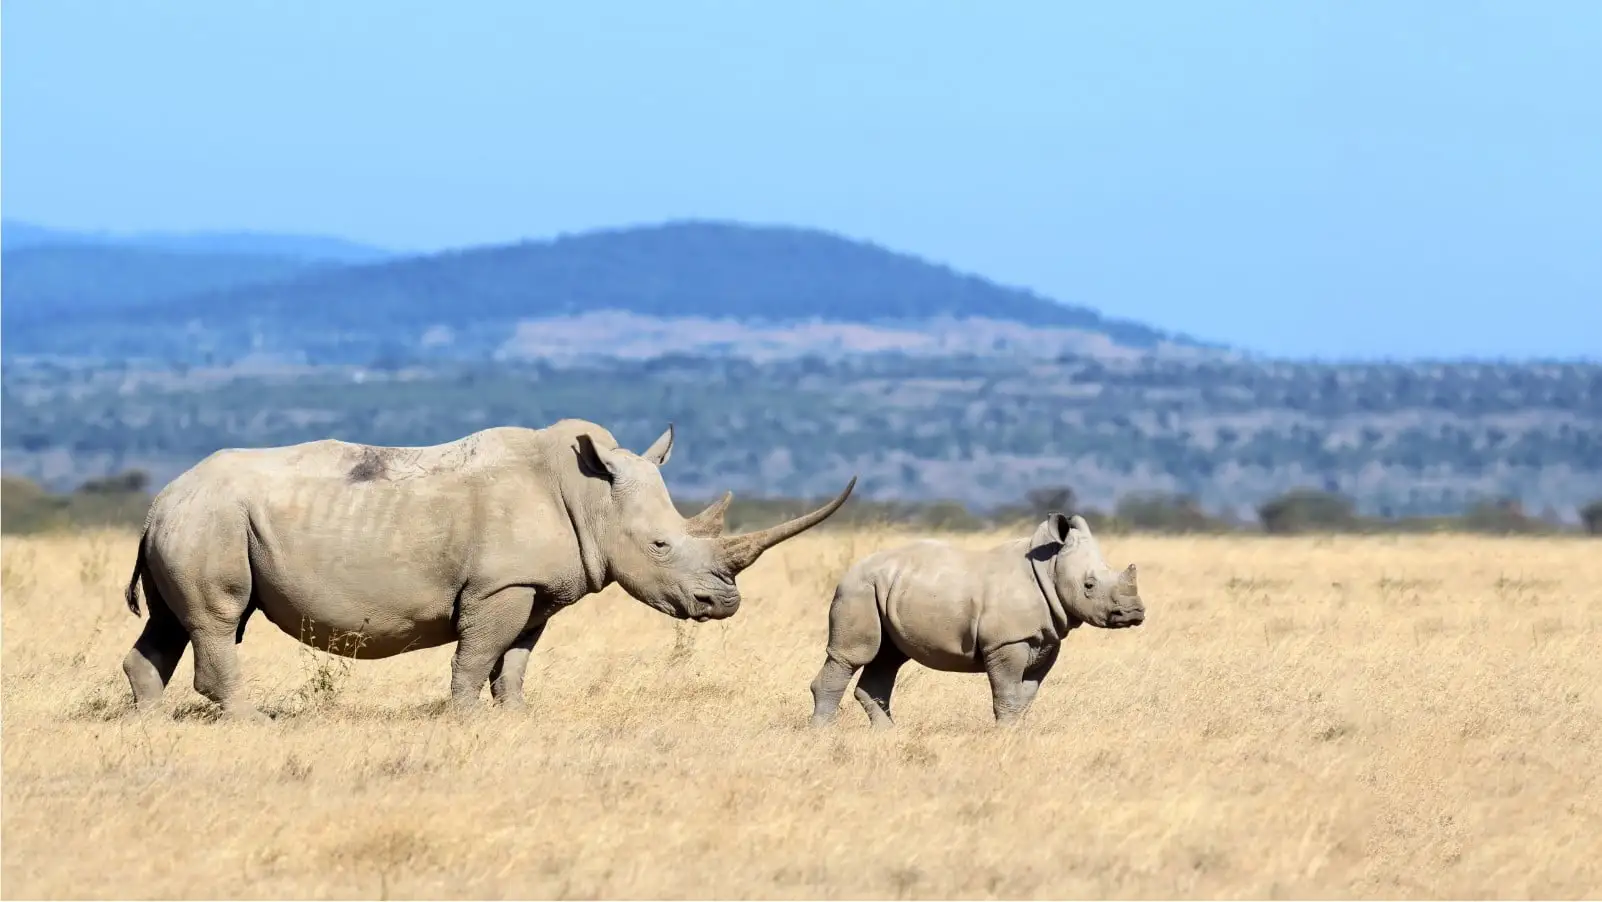 a couple of rhinos walking across a dry grass field